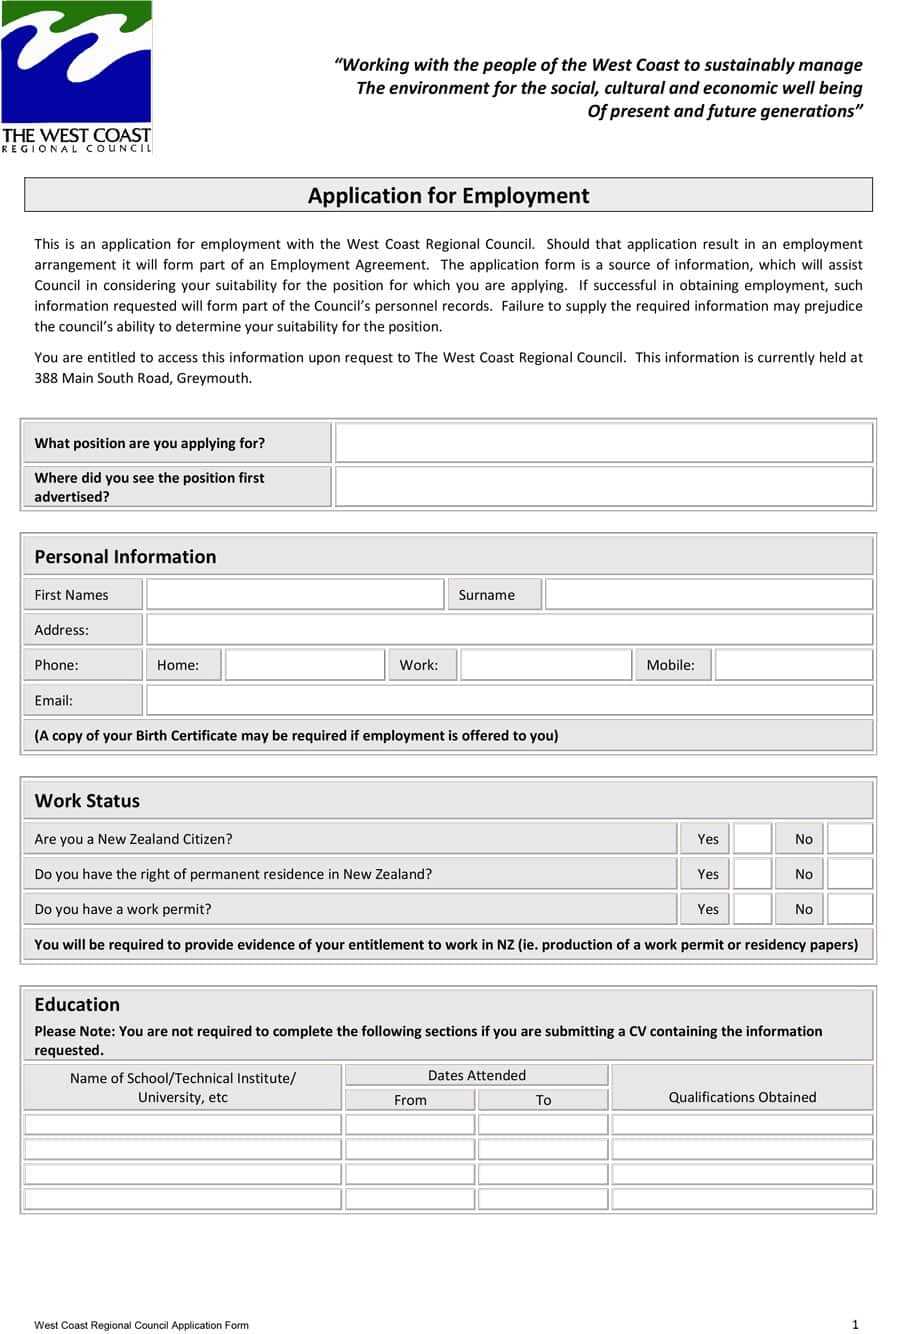 50 Free Employment / Job Application Form Templates For Employment Application Template Microsoft Word